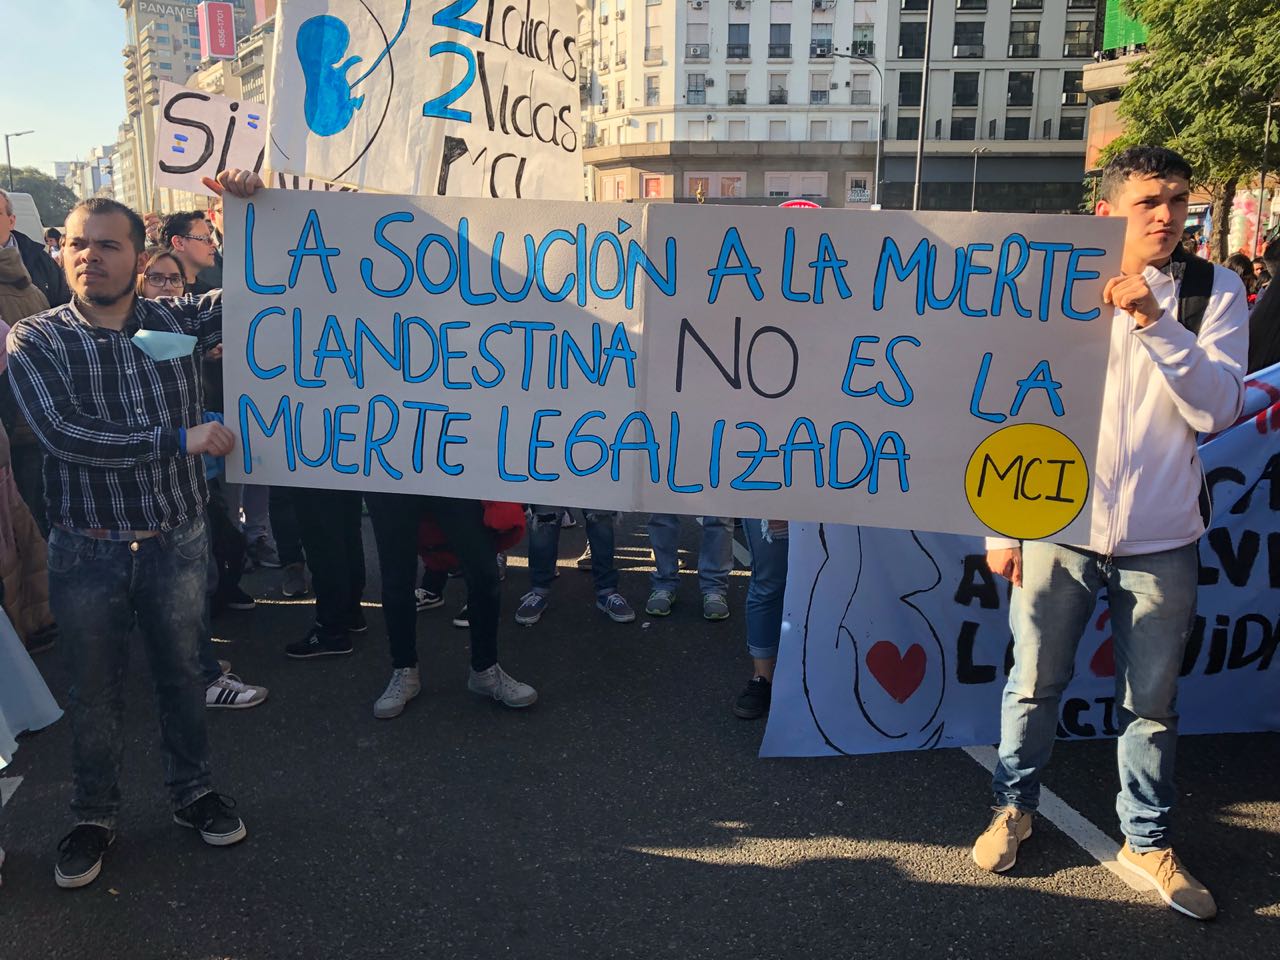 Grupo em defesa na vida na Argentina, contra aborto